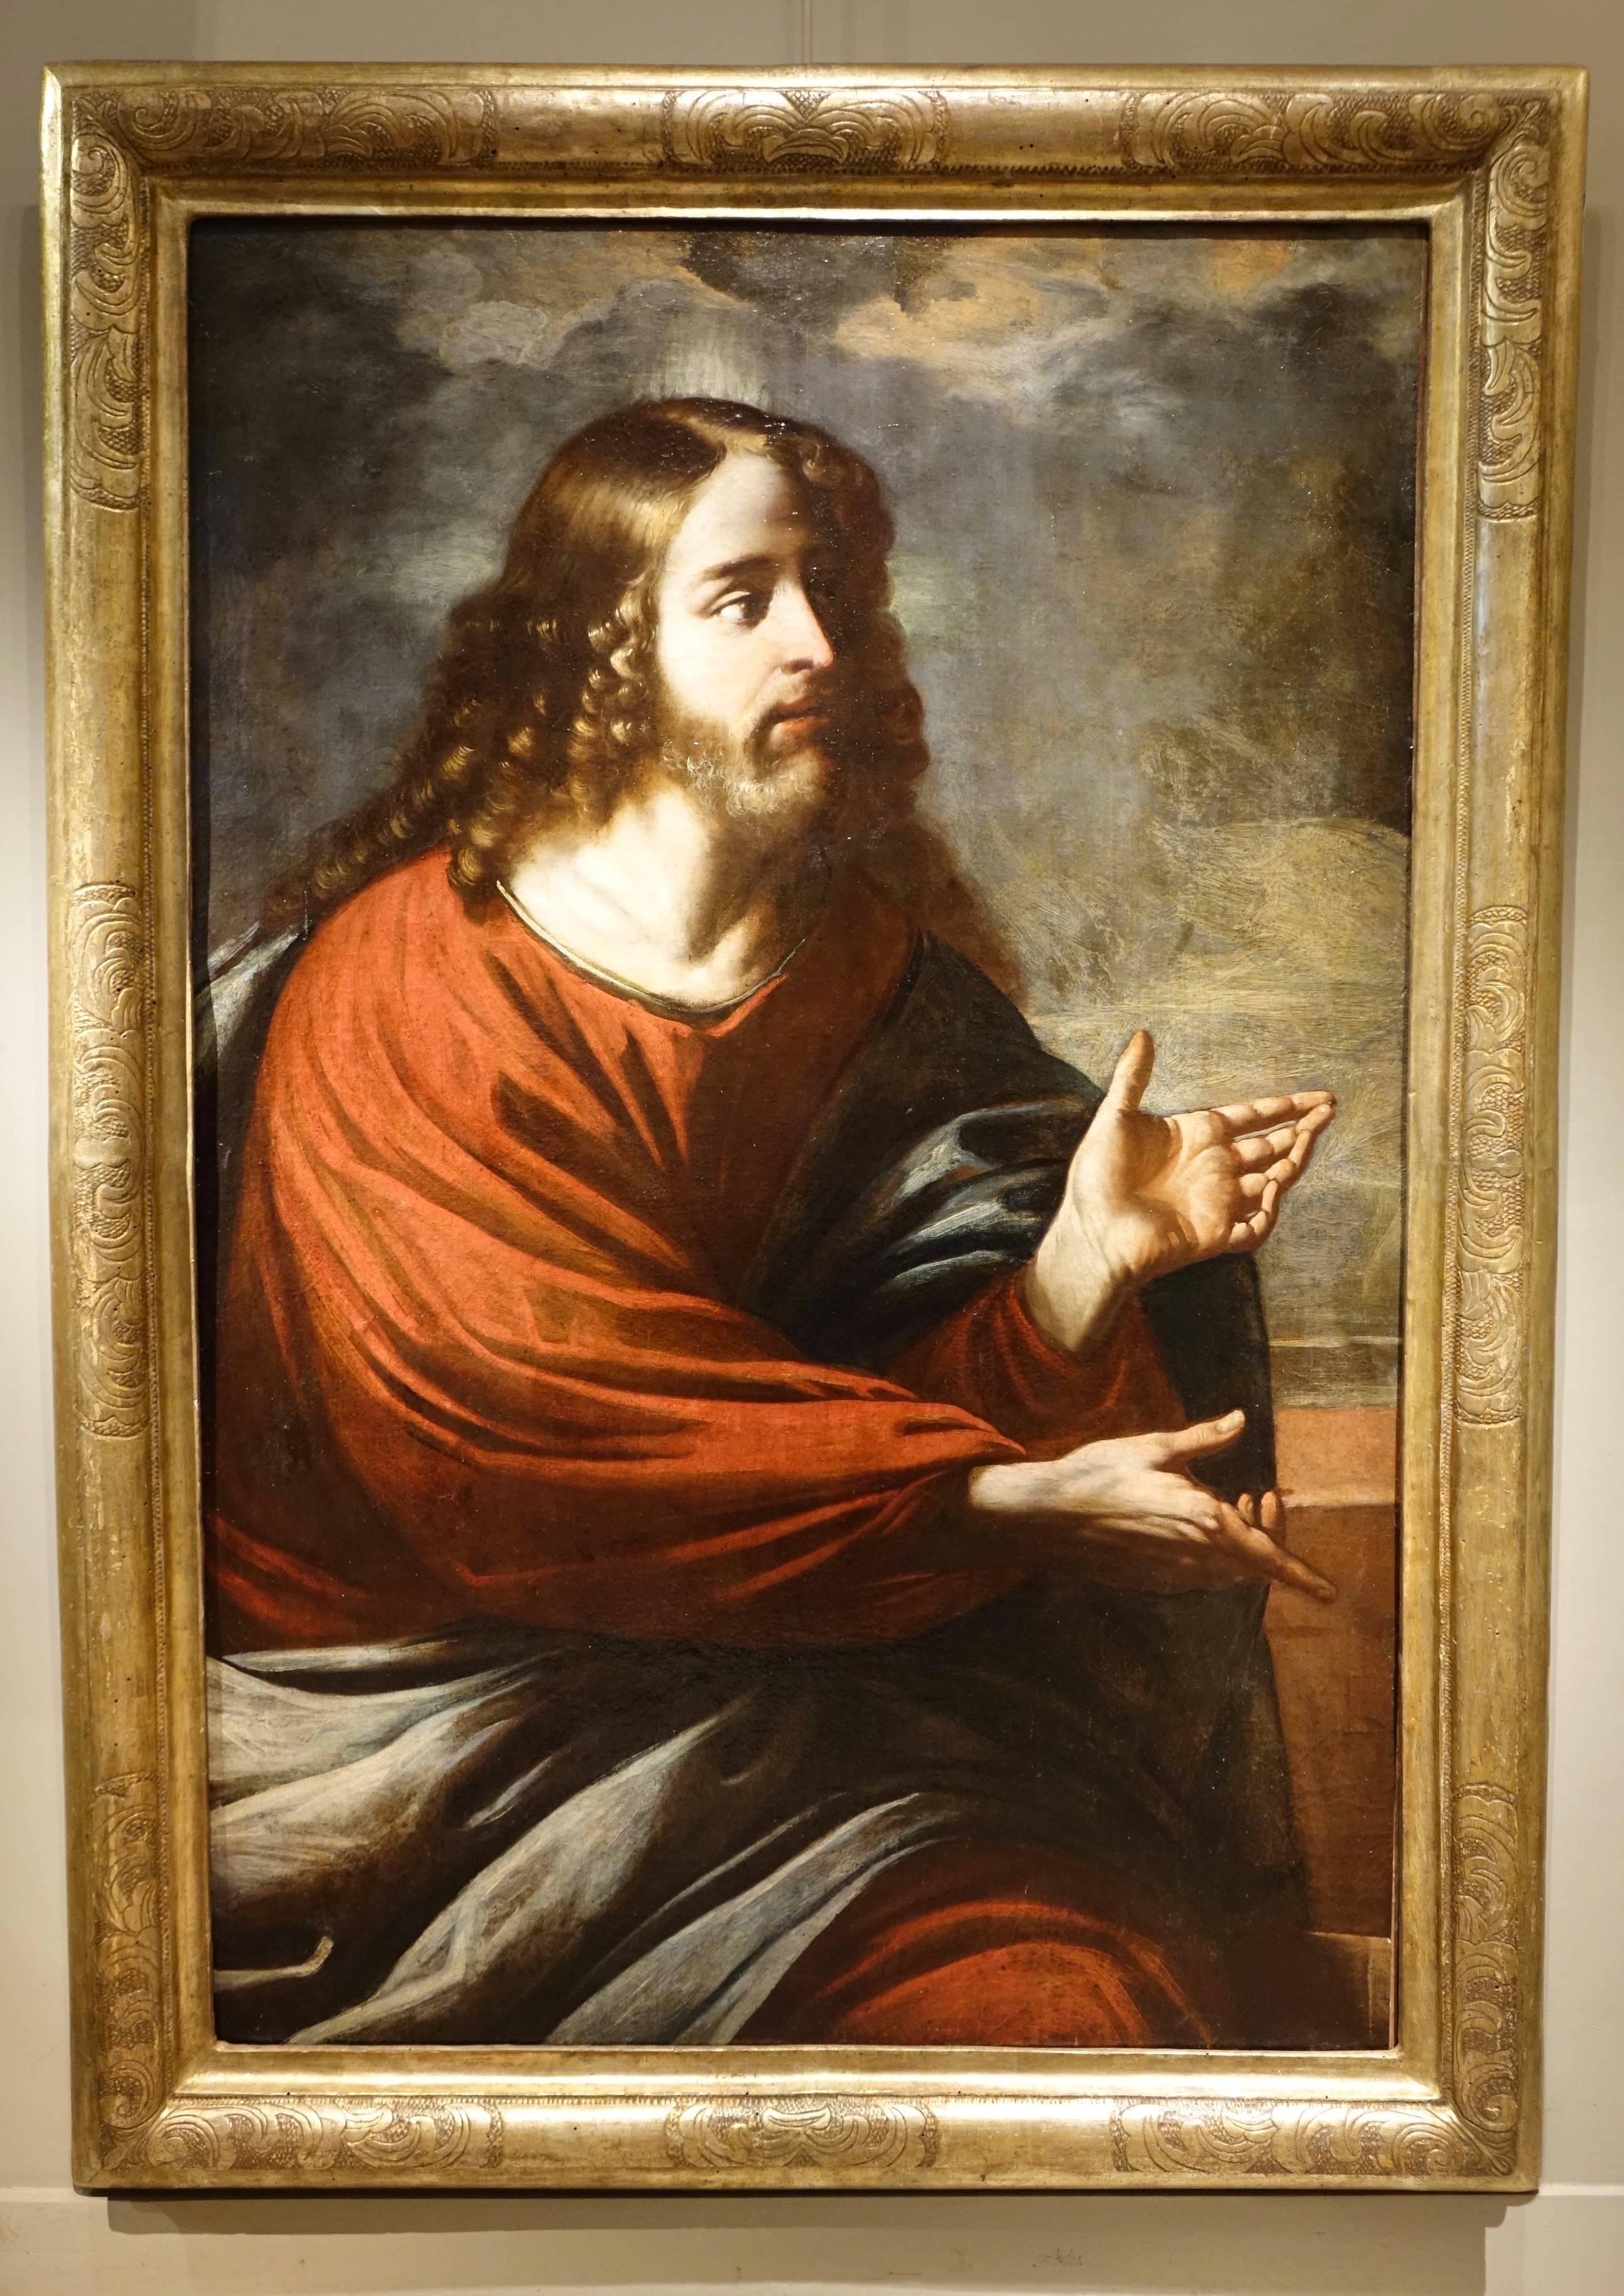  A Painting Representing the Christ Preaching,  Italian School, circa 1620 1